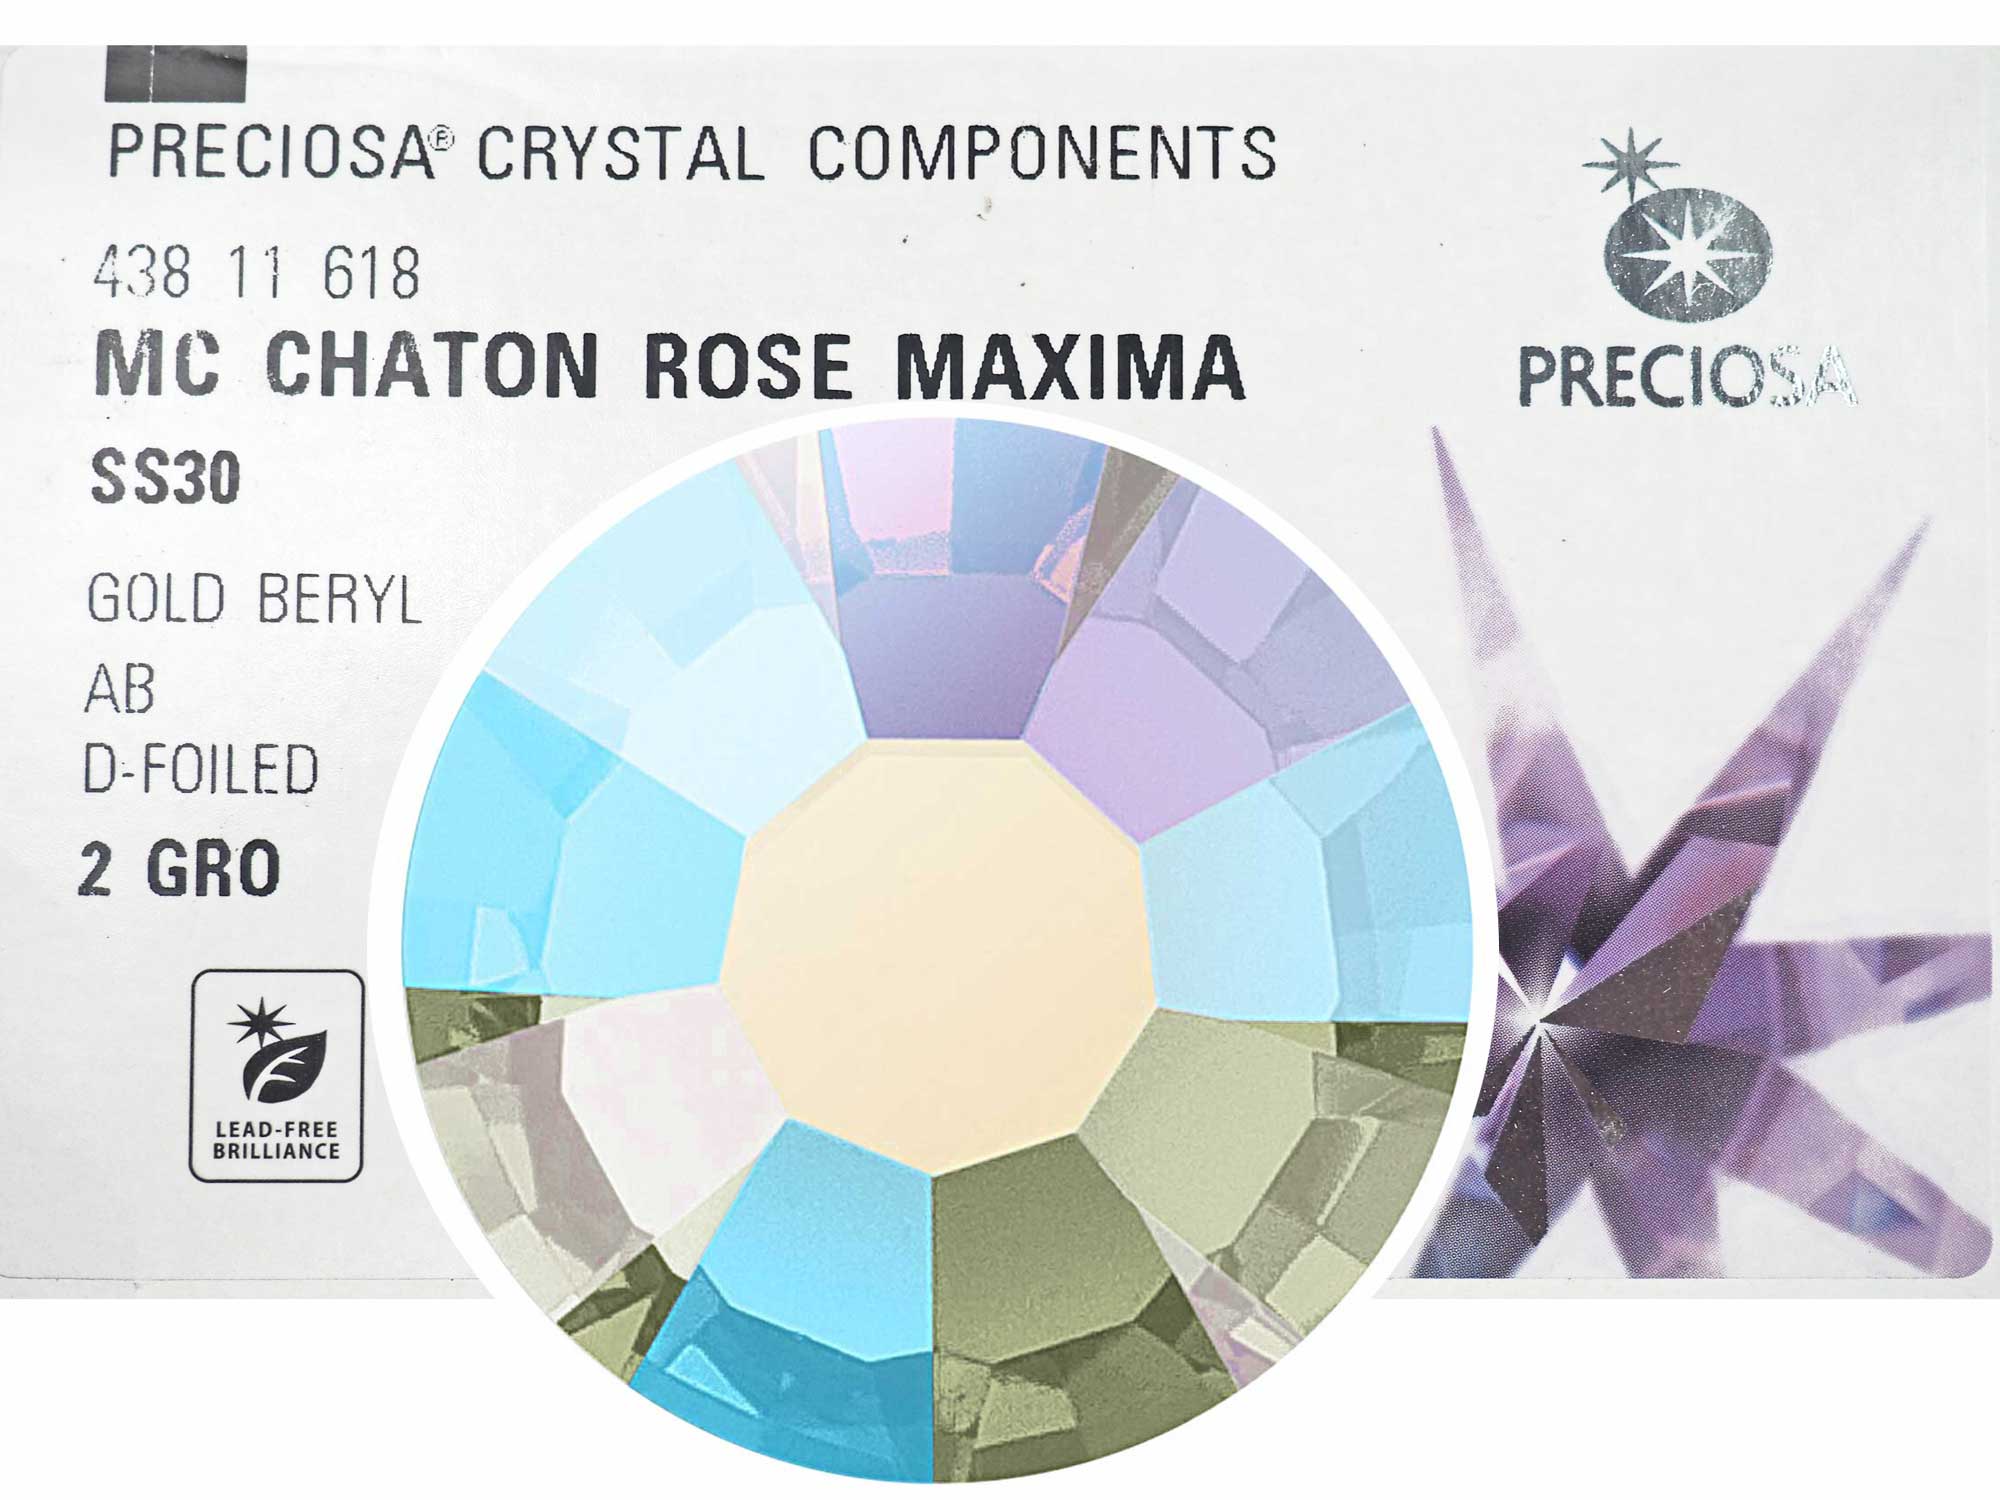 Gold Beryl AB, Preciosa VIVA or MAXIMA Chaton Roses (Rhinestone Flatbacks), Genuine Czech Crystals, khaki green with Aurora Borealis